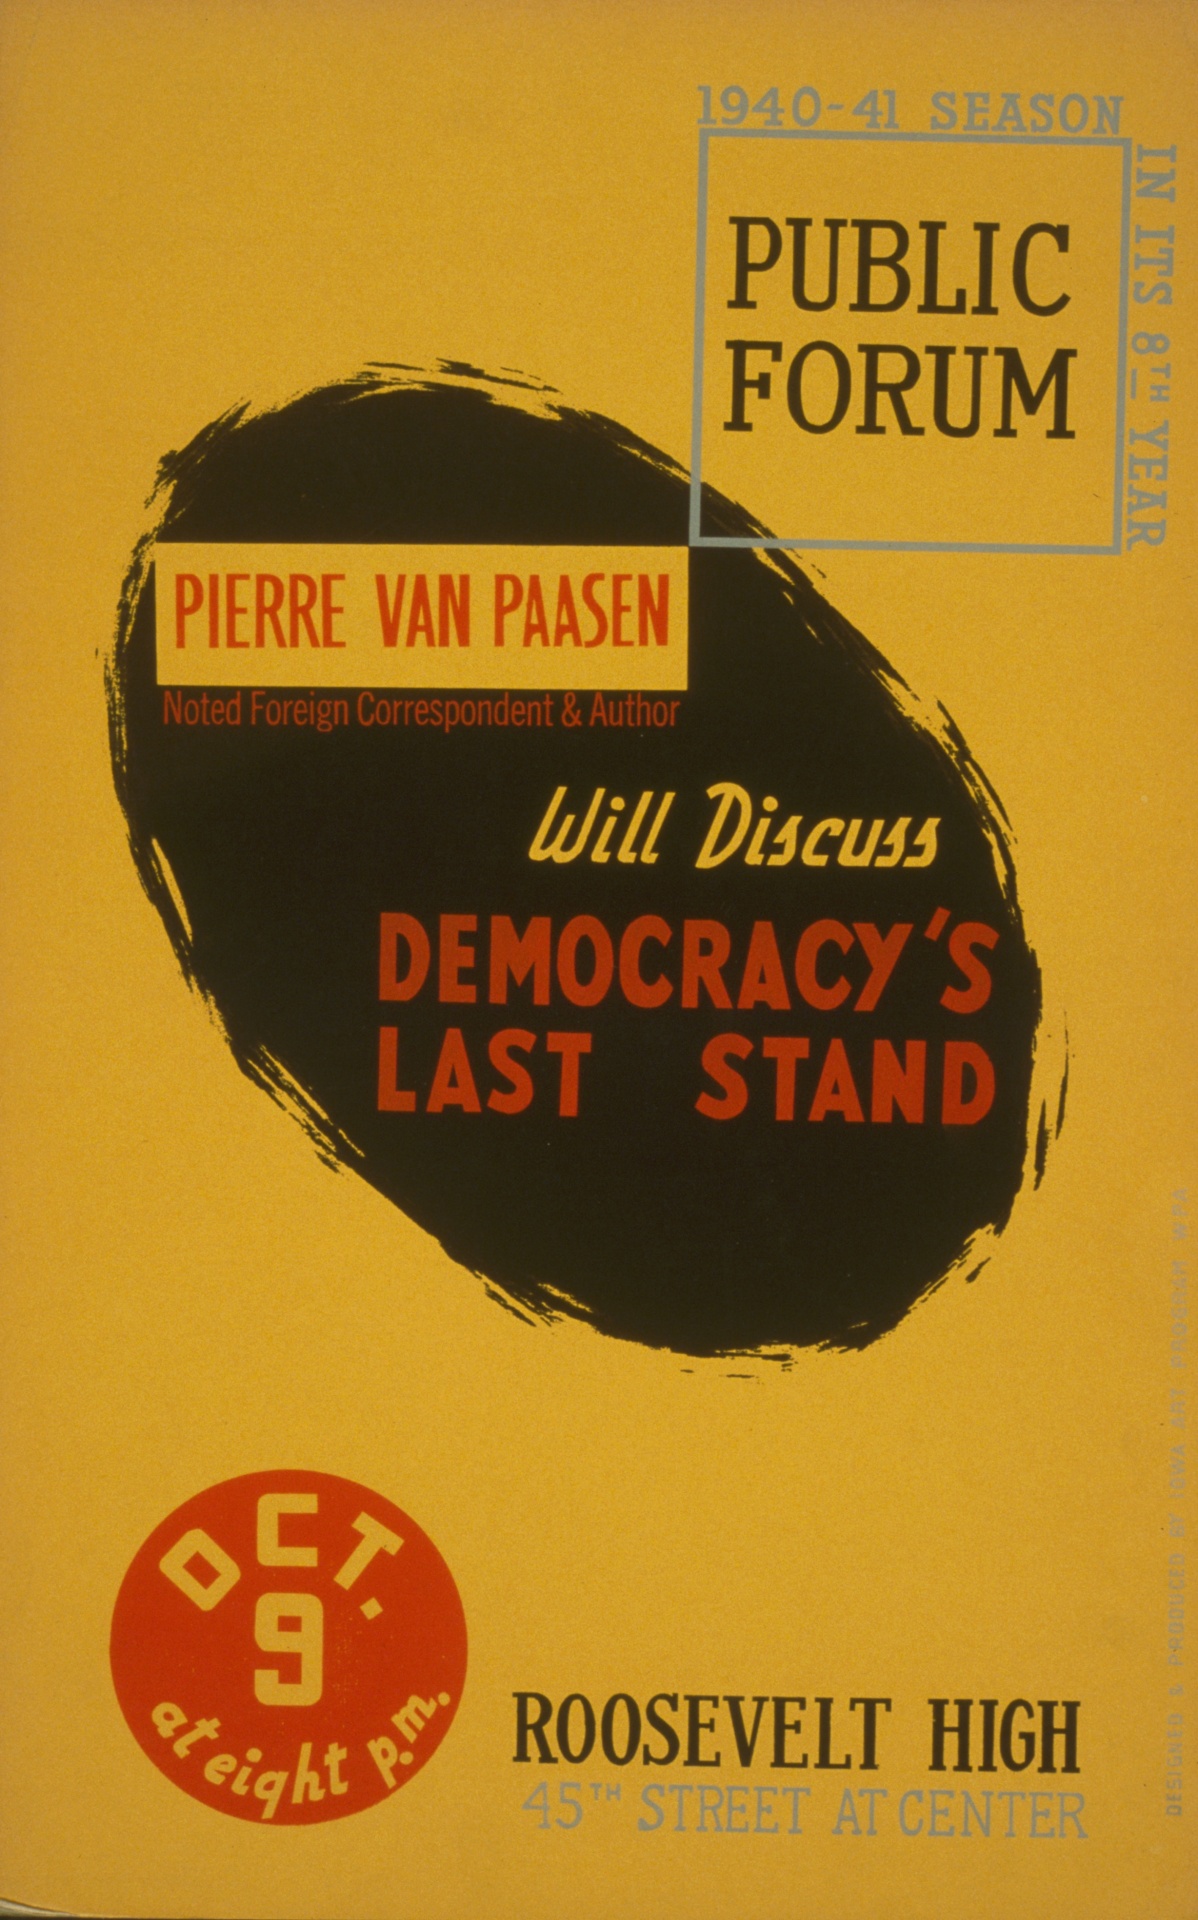 Vintage Forum Poster